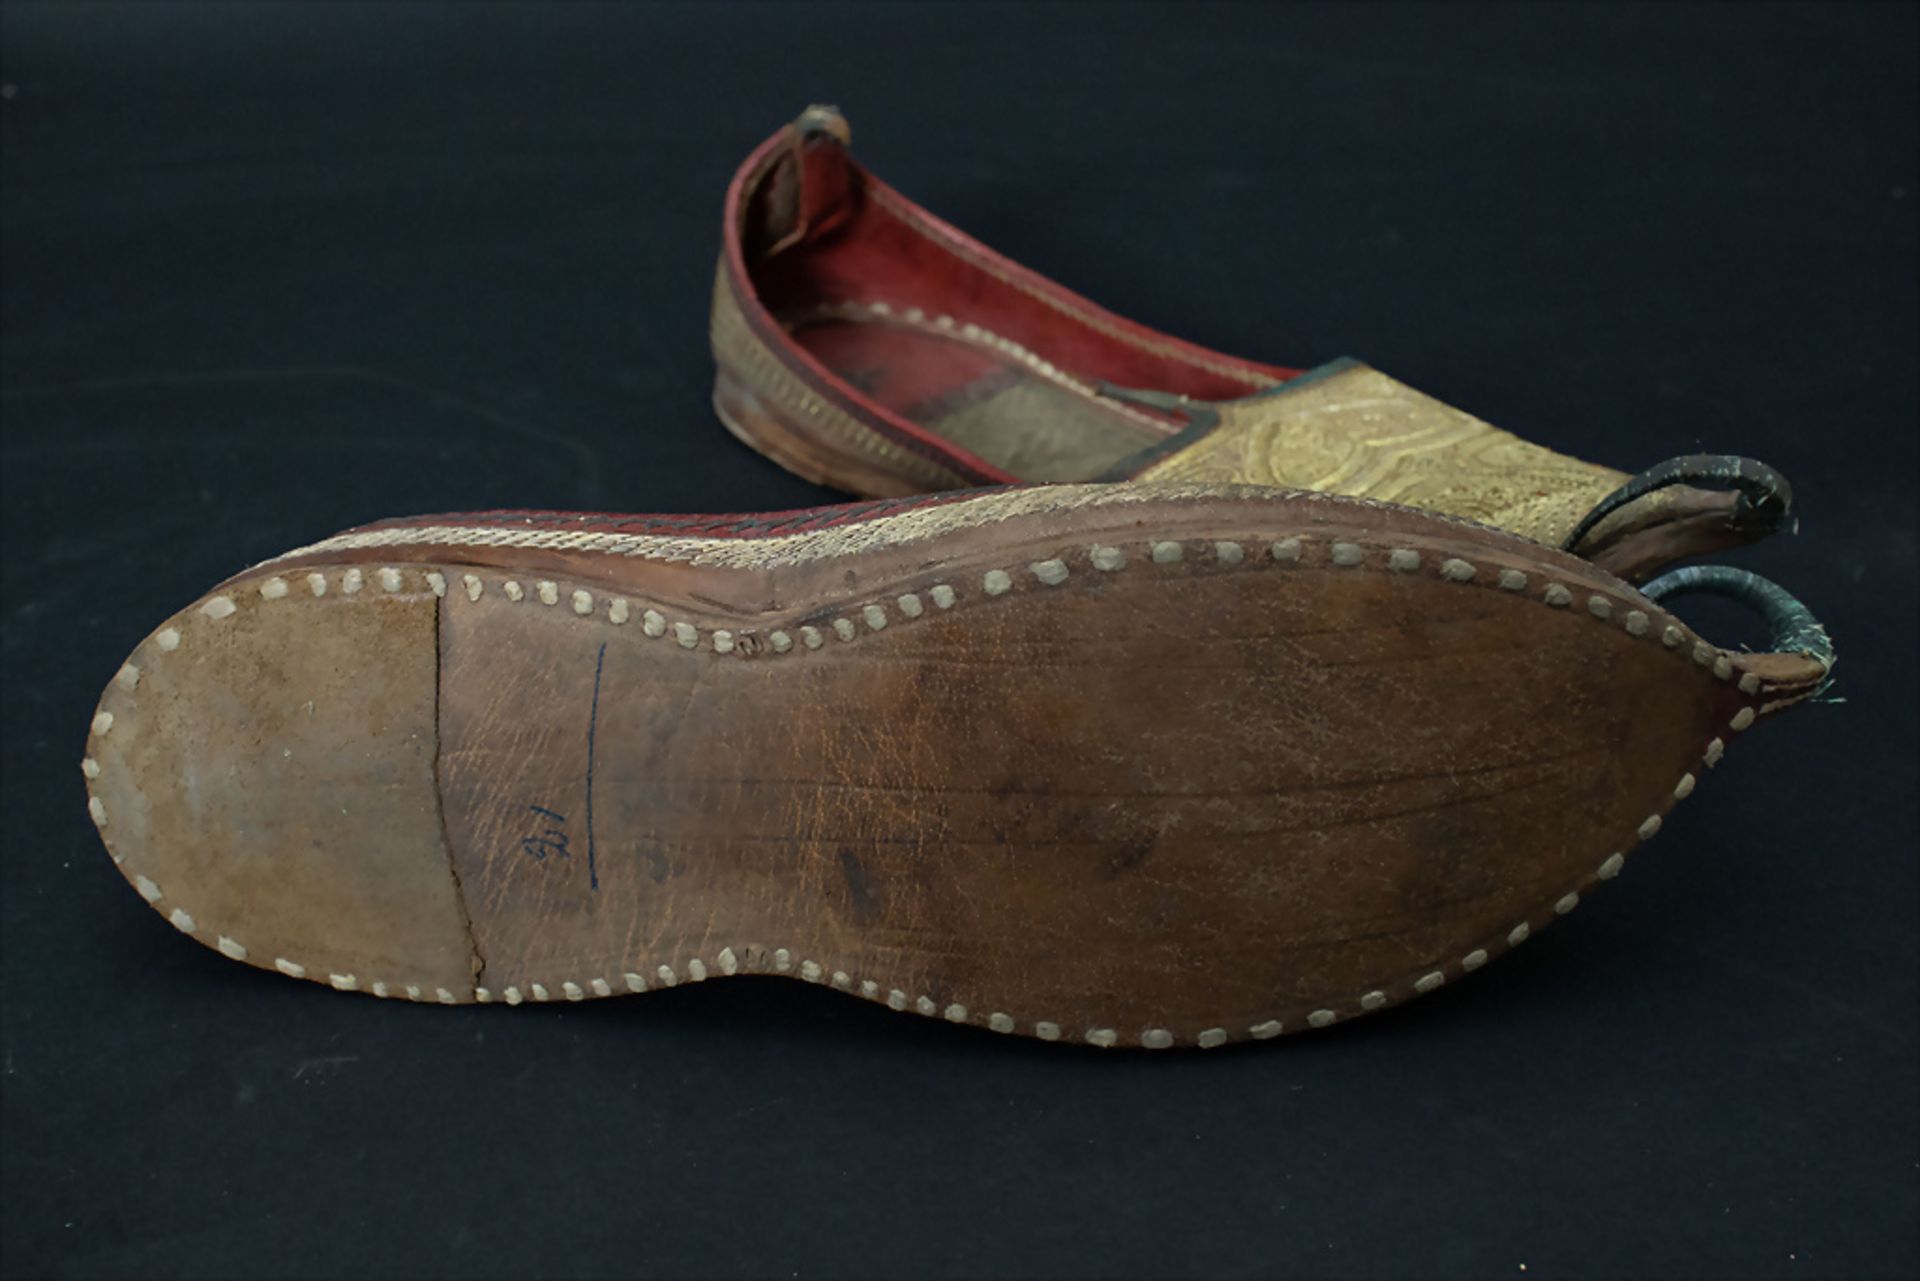 Paar Damenschuhe / A pair of ladies slippers, um 1900 - Image 3 of 4